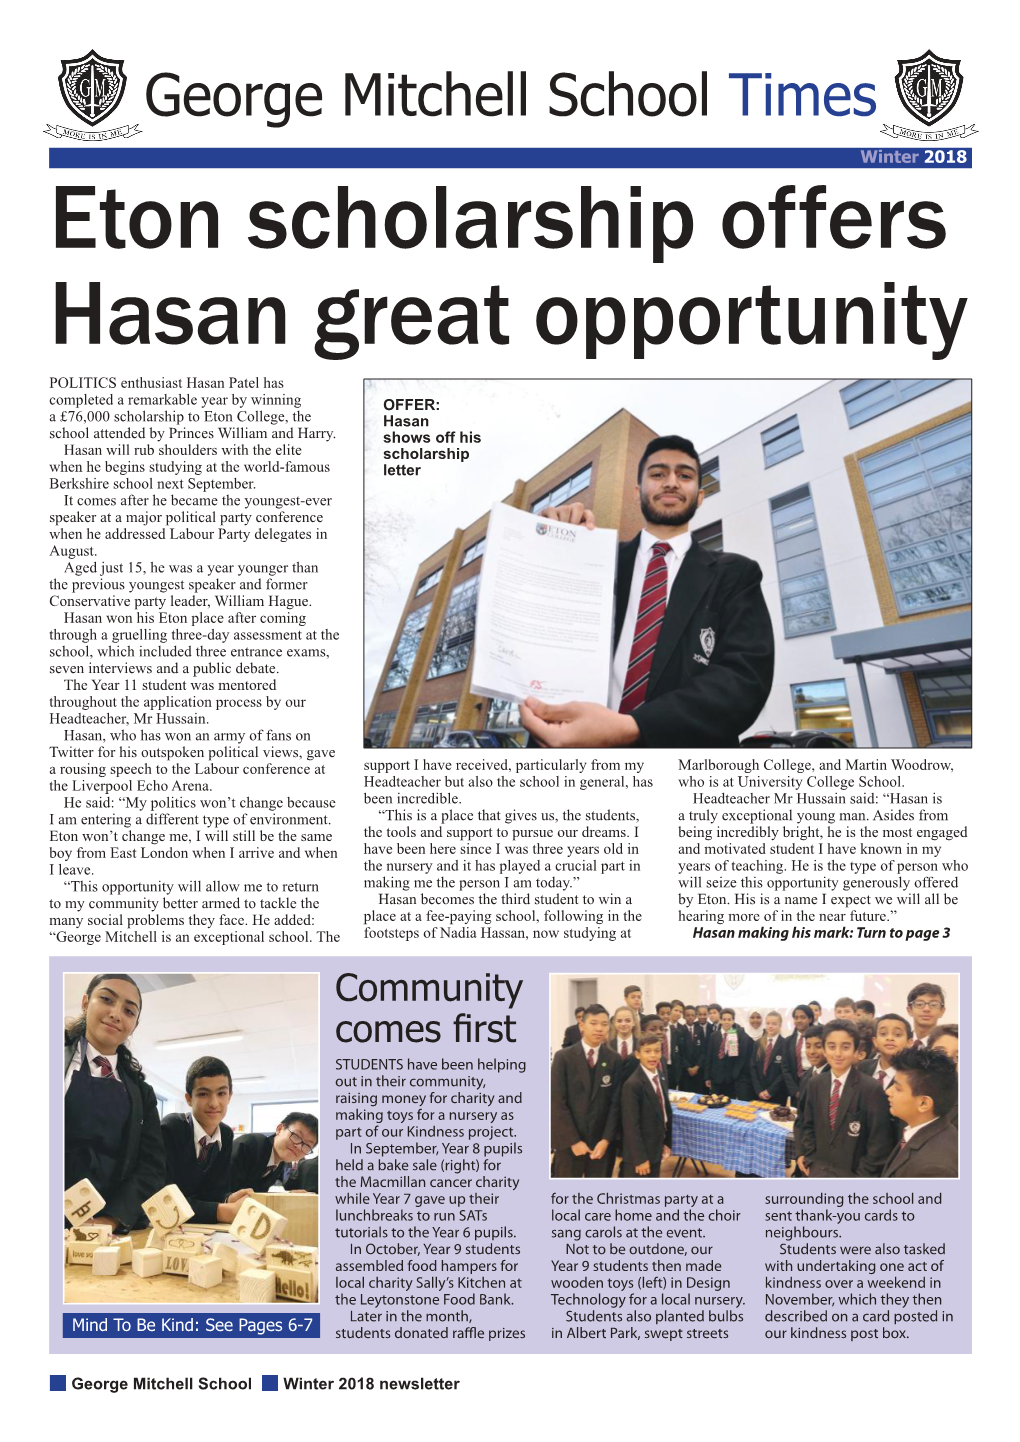 Eton Scholarship Offers Hasan Great Opportunity